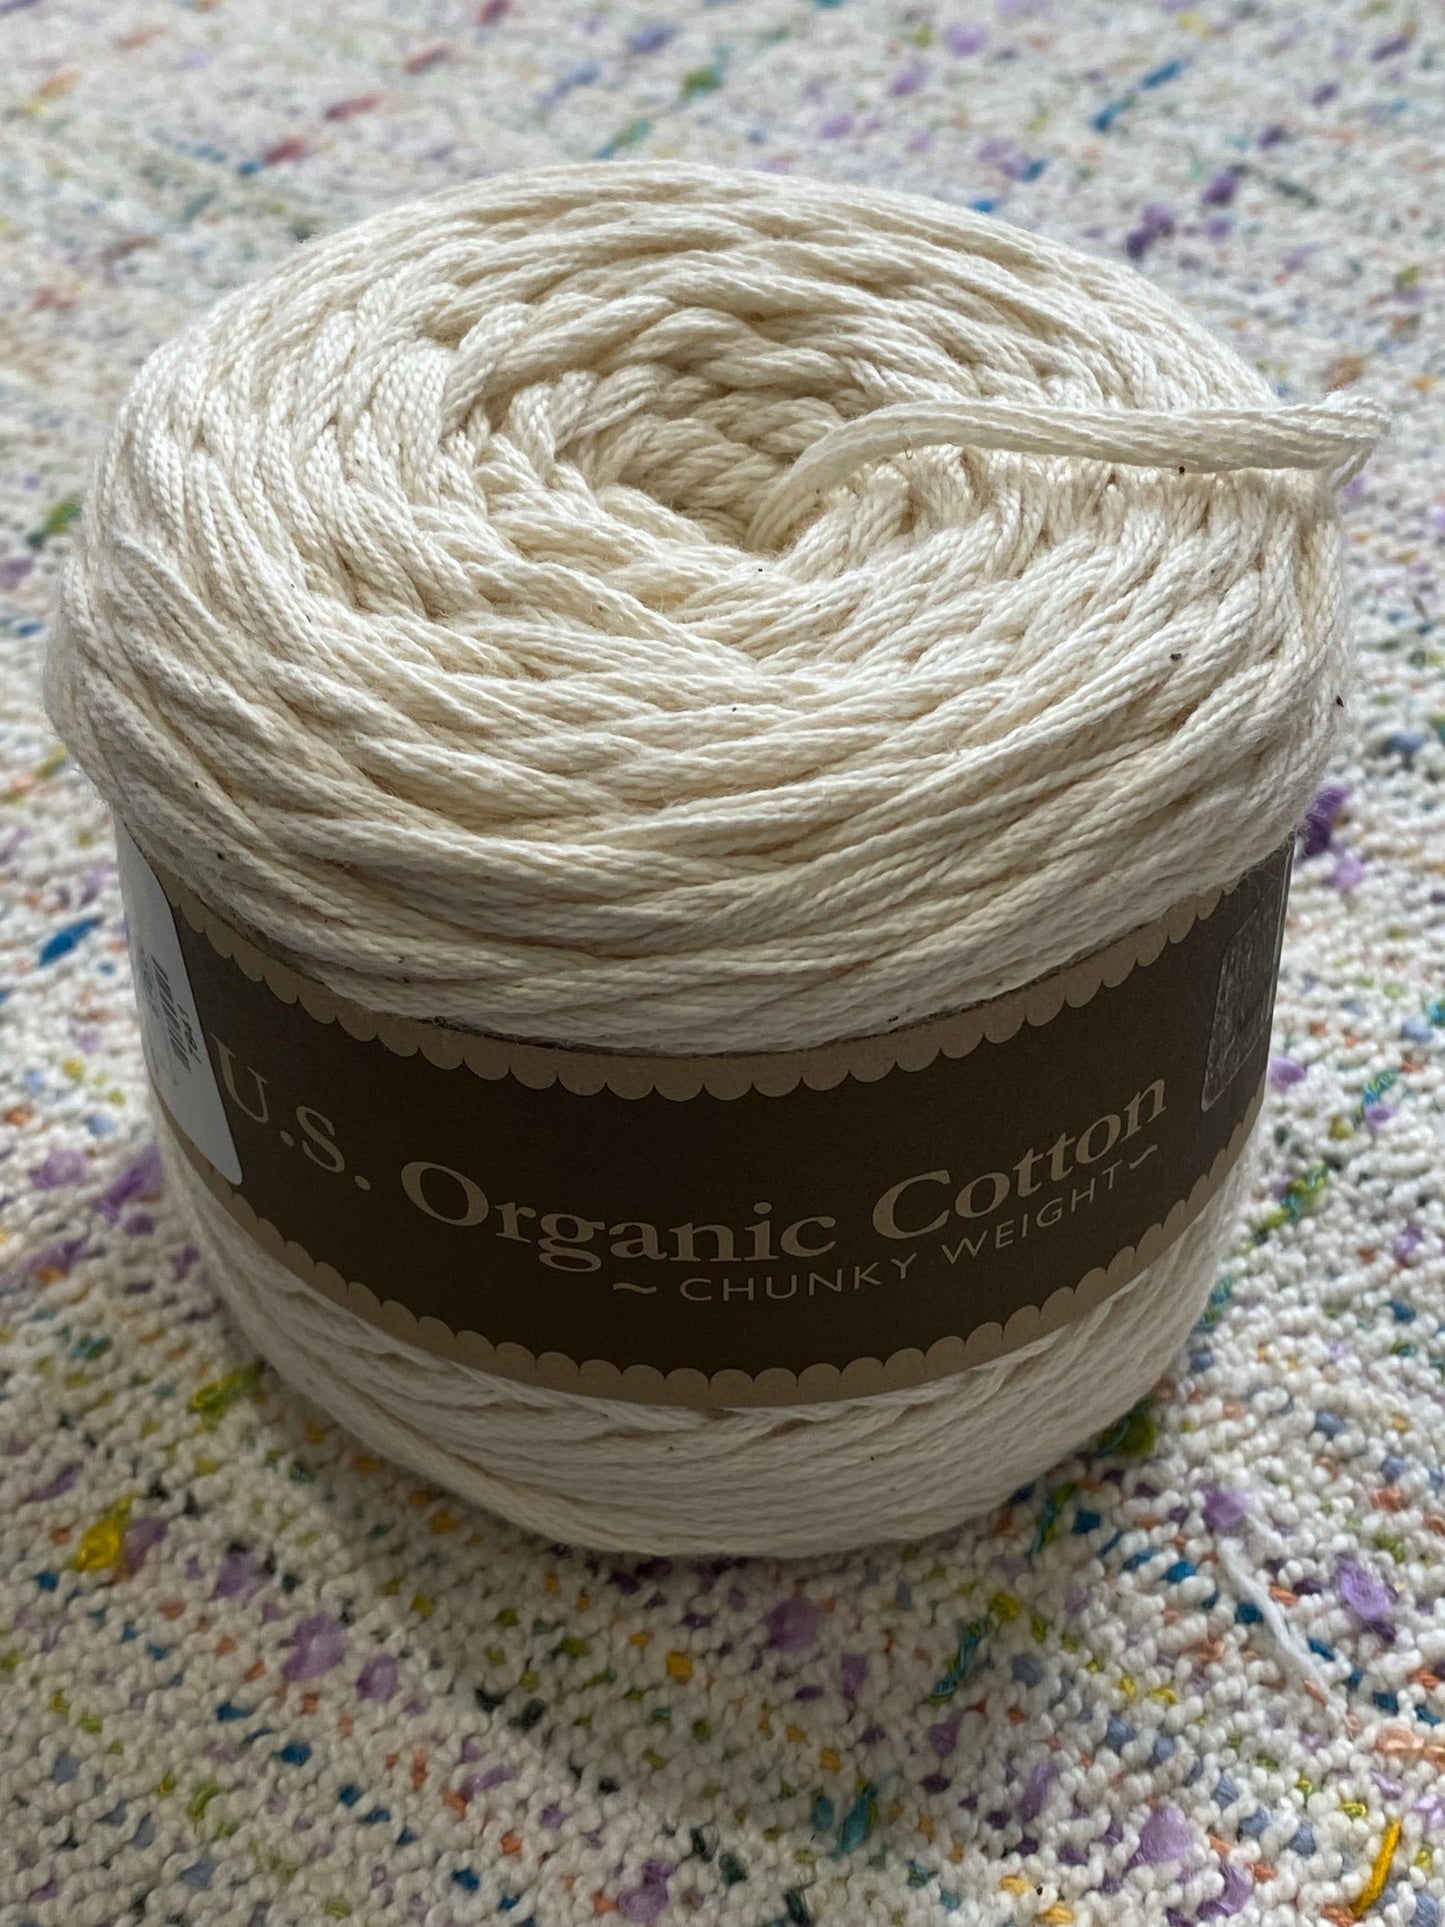 Appalachian Baby Chunky Cotton Natural Yarn